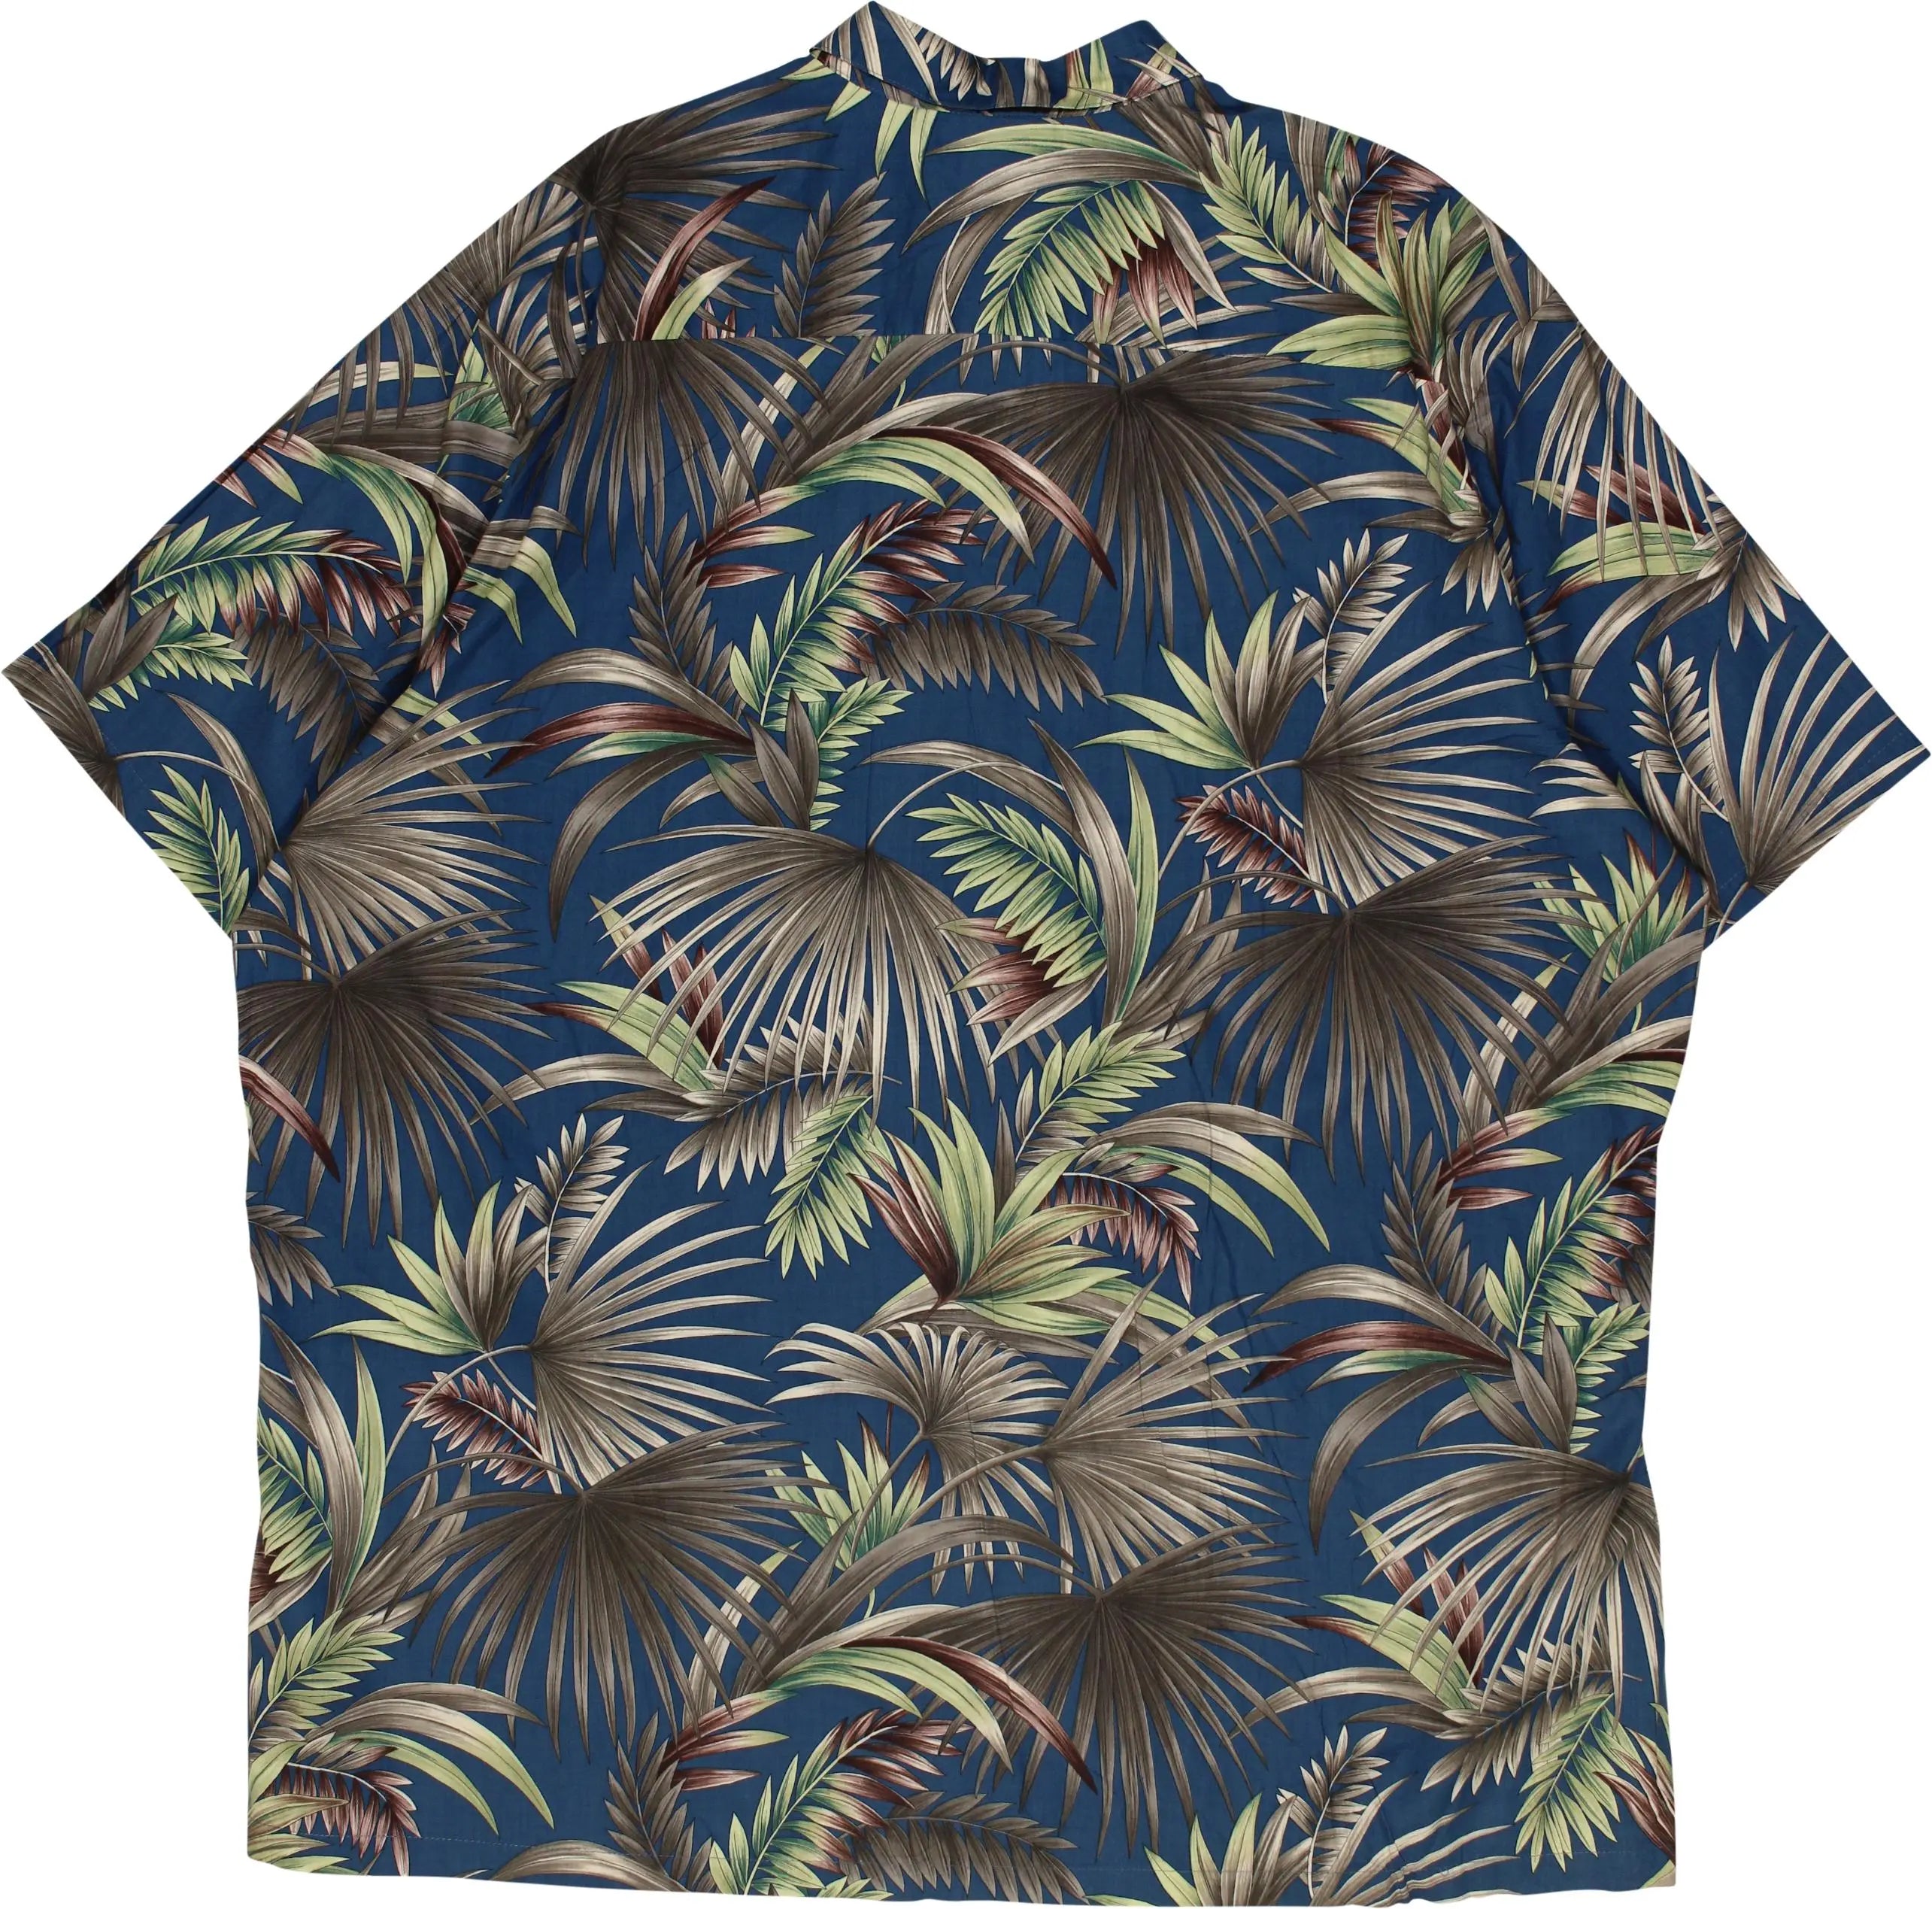 Tori Richard - Hawaiian Shirt- ThriftTale.com - Vintage and second handclothing